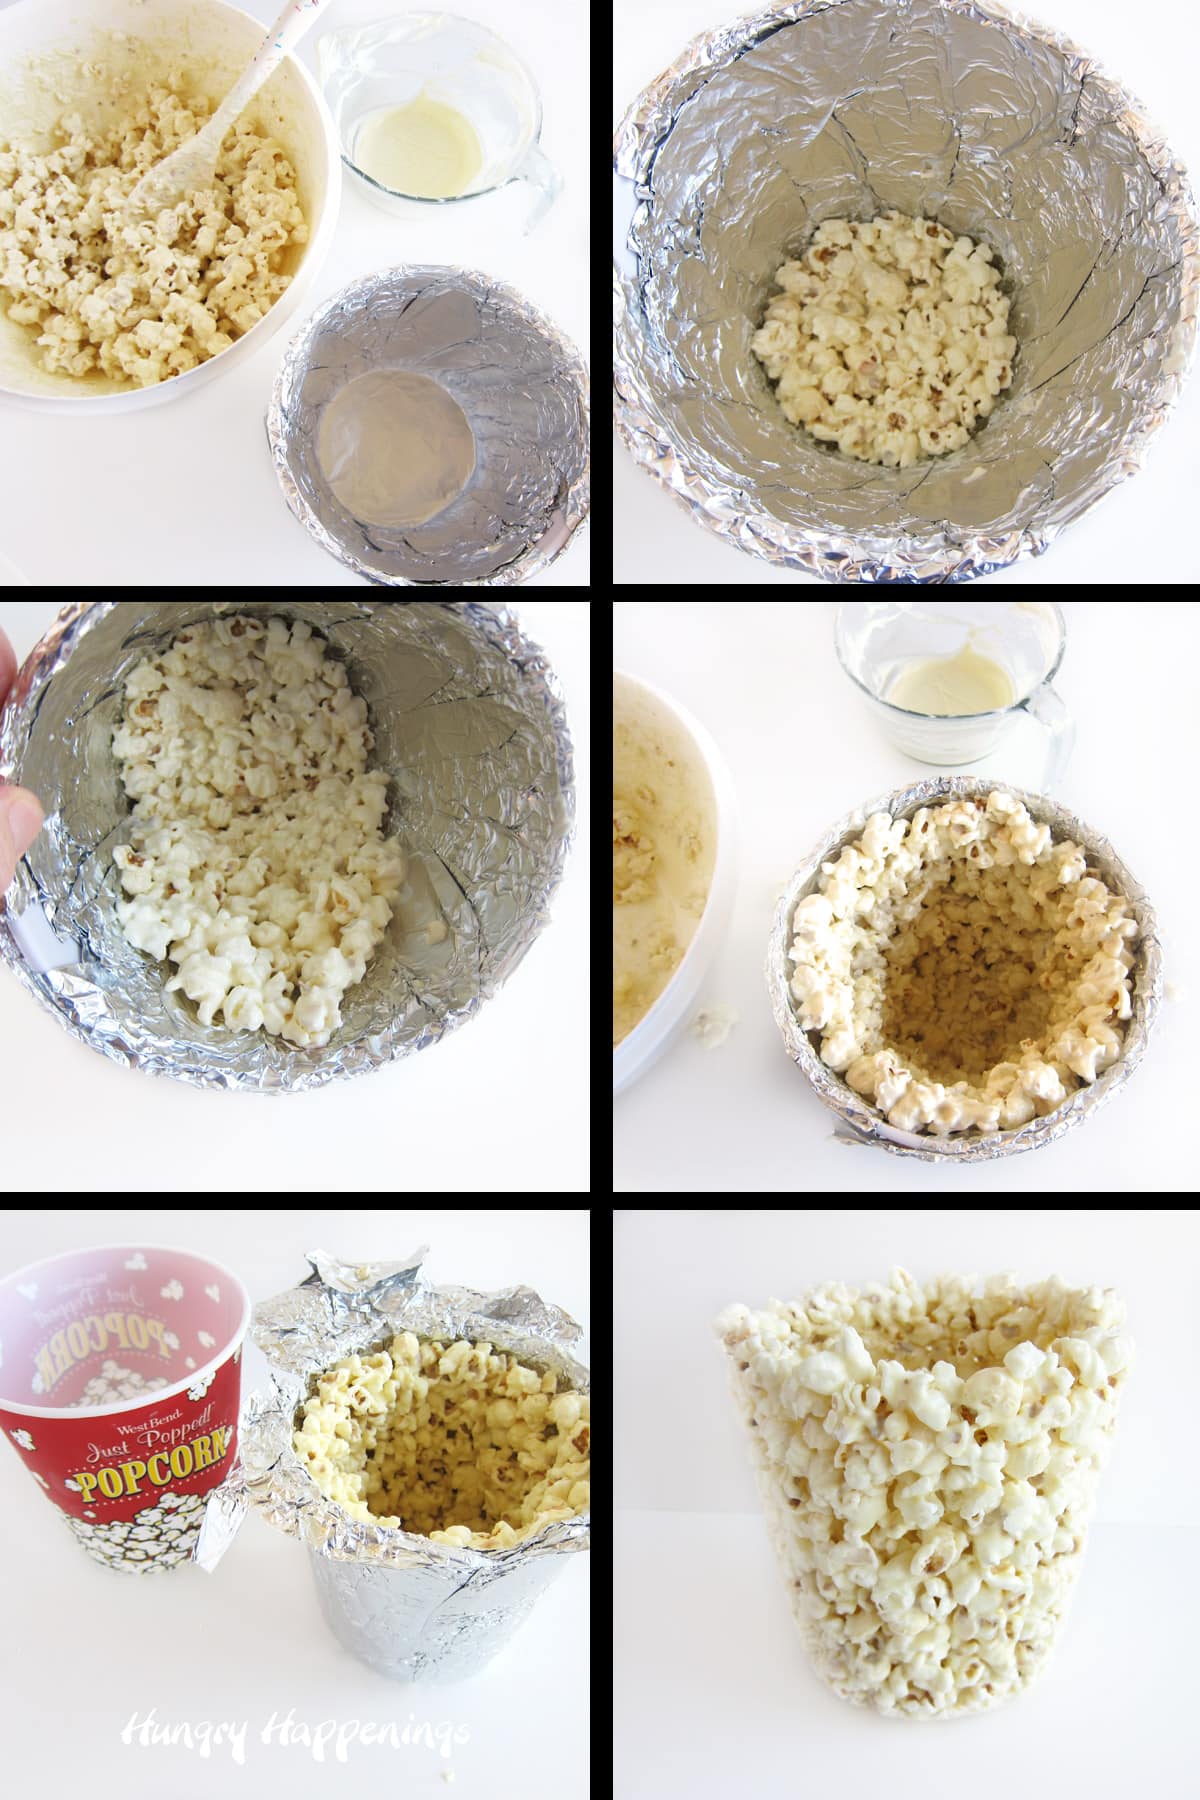 Create a bucket by pressing white chocolate popcorn inside a popcorn bucket.